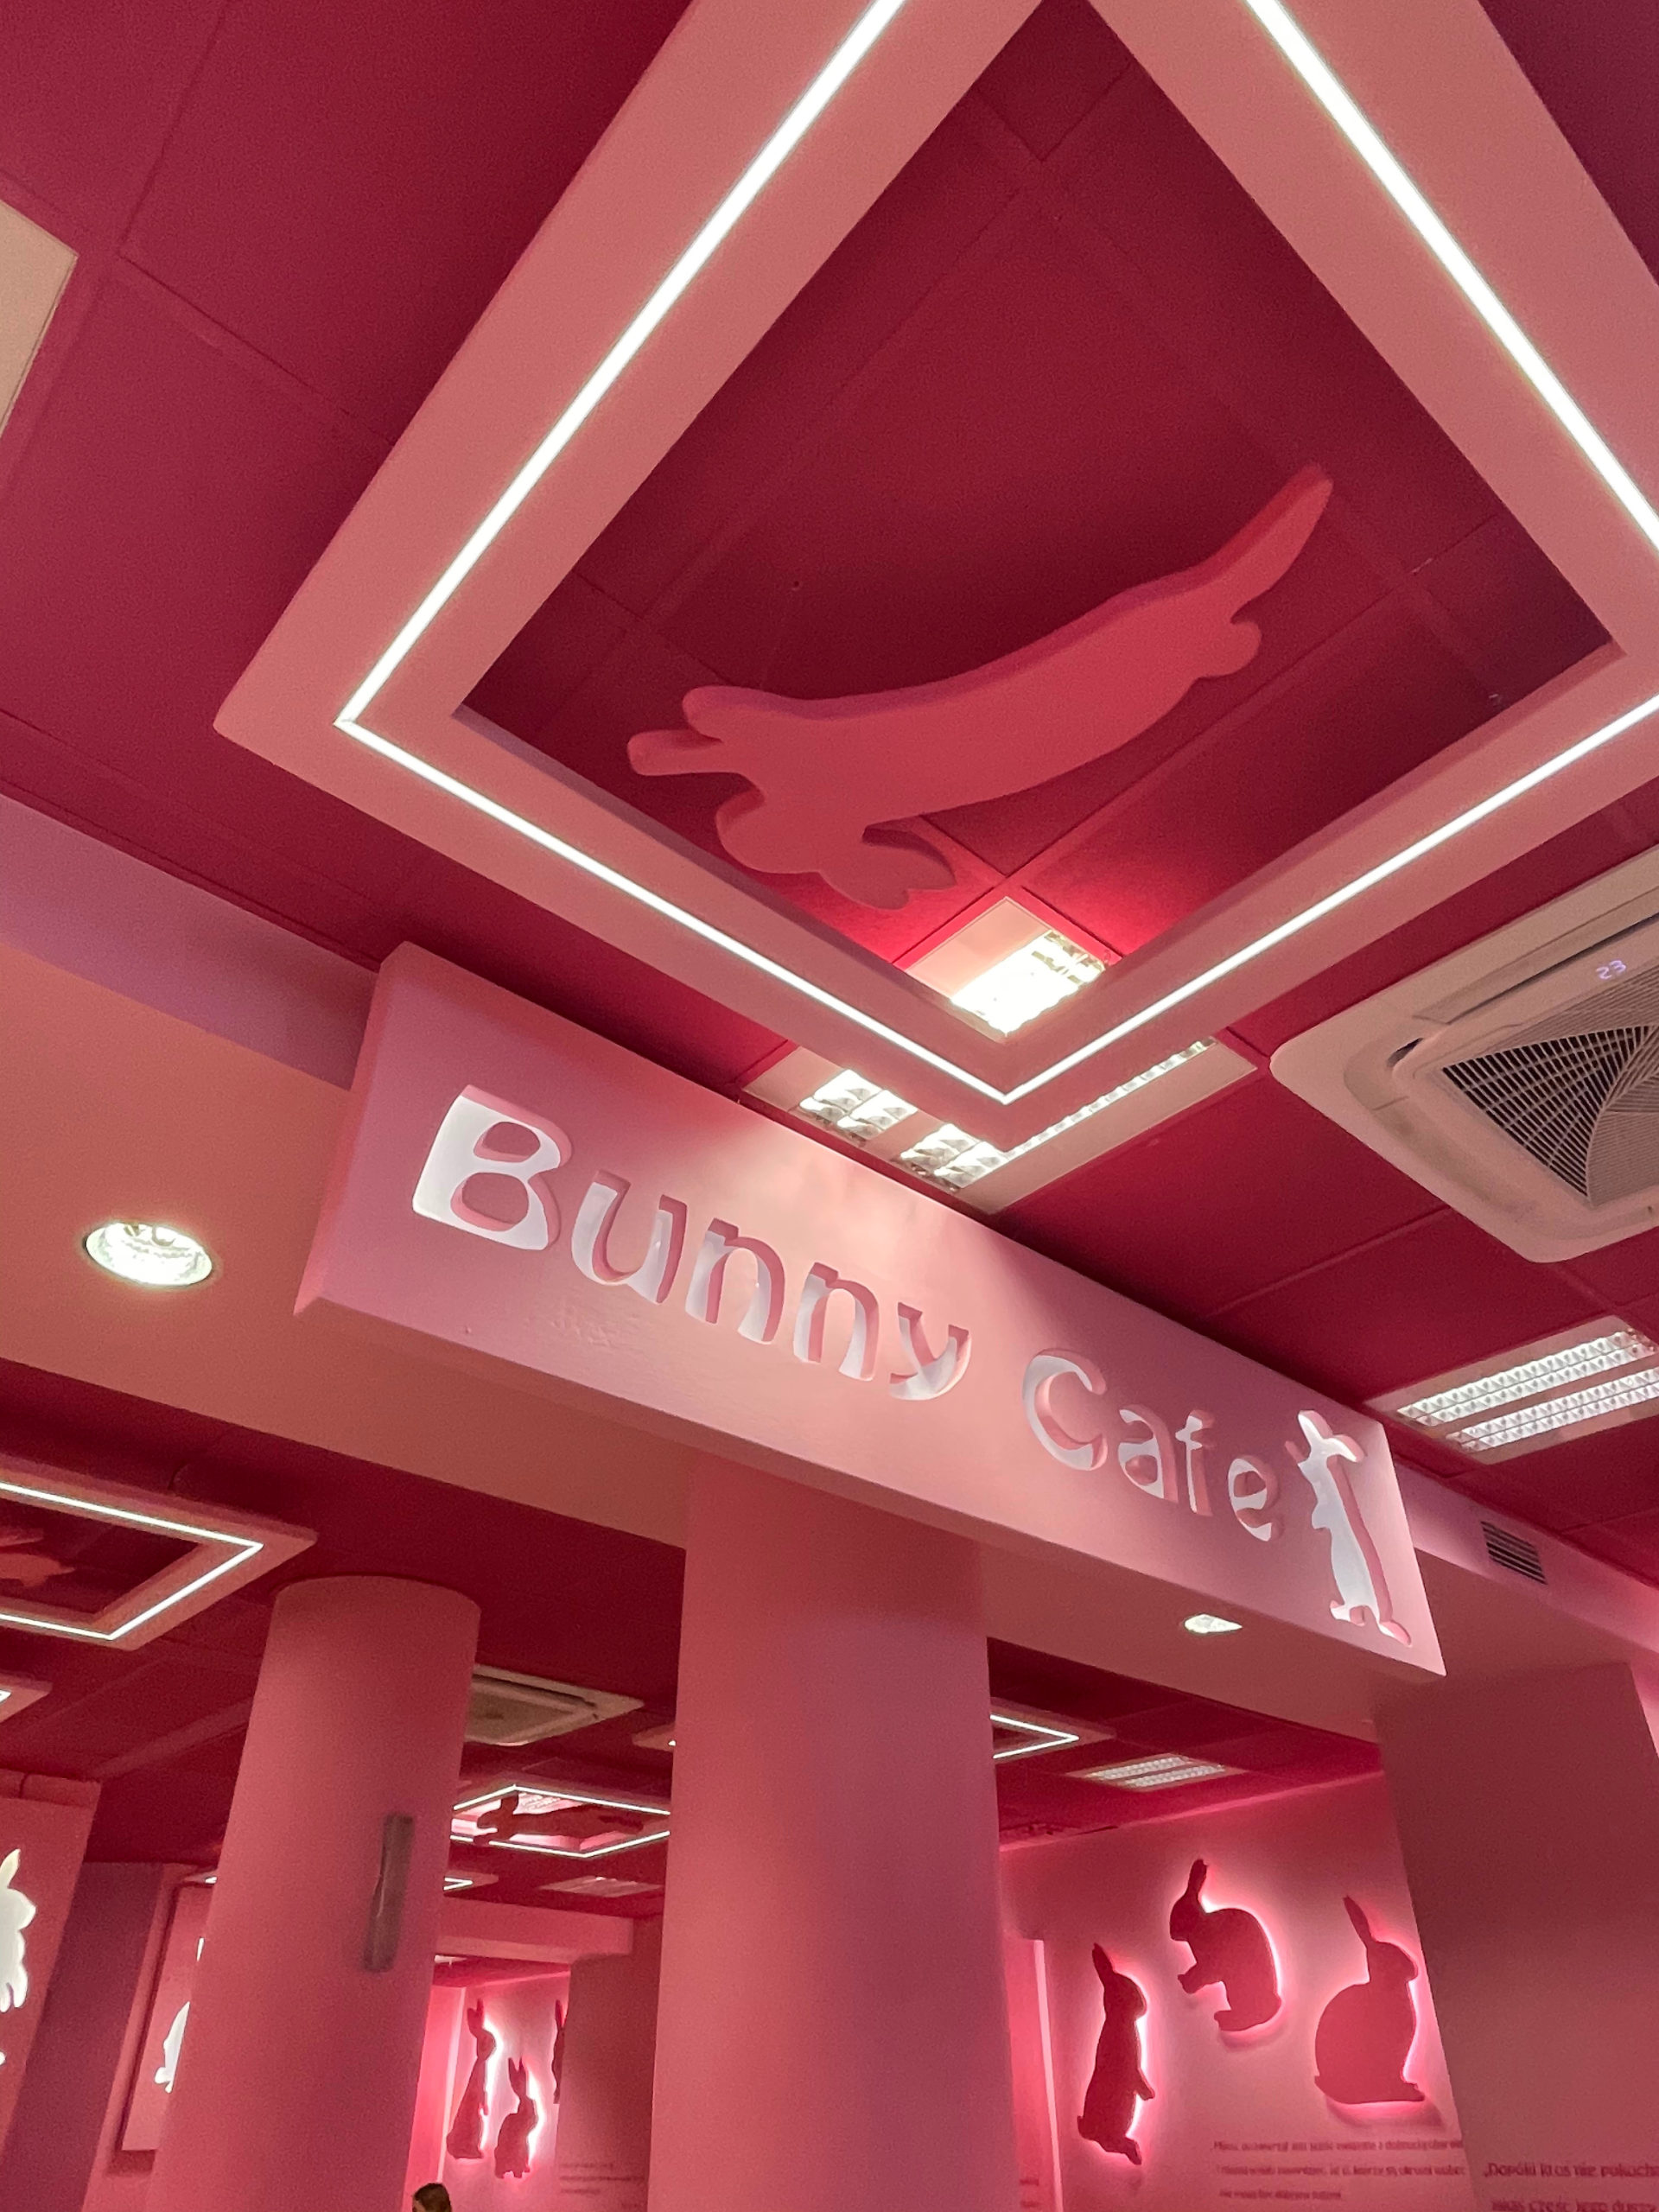 bunny cafe signage - fully pink